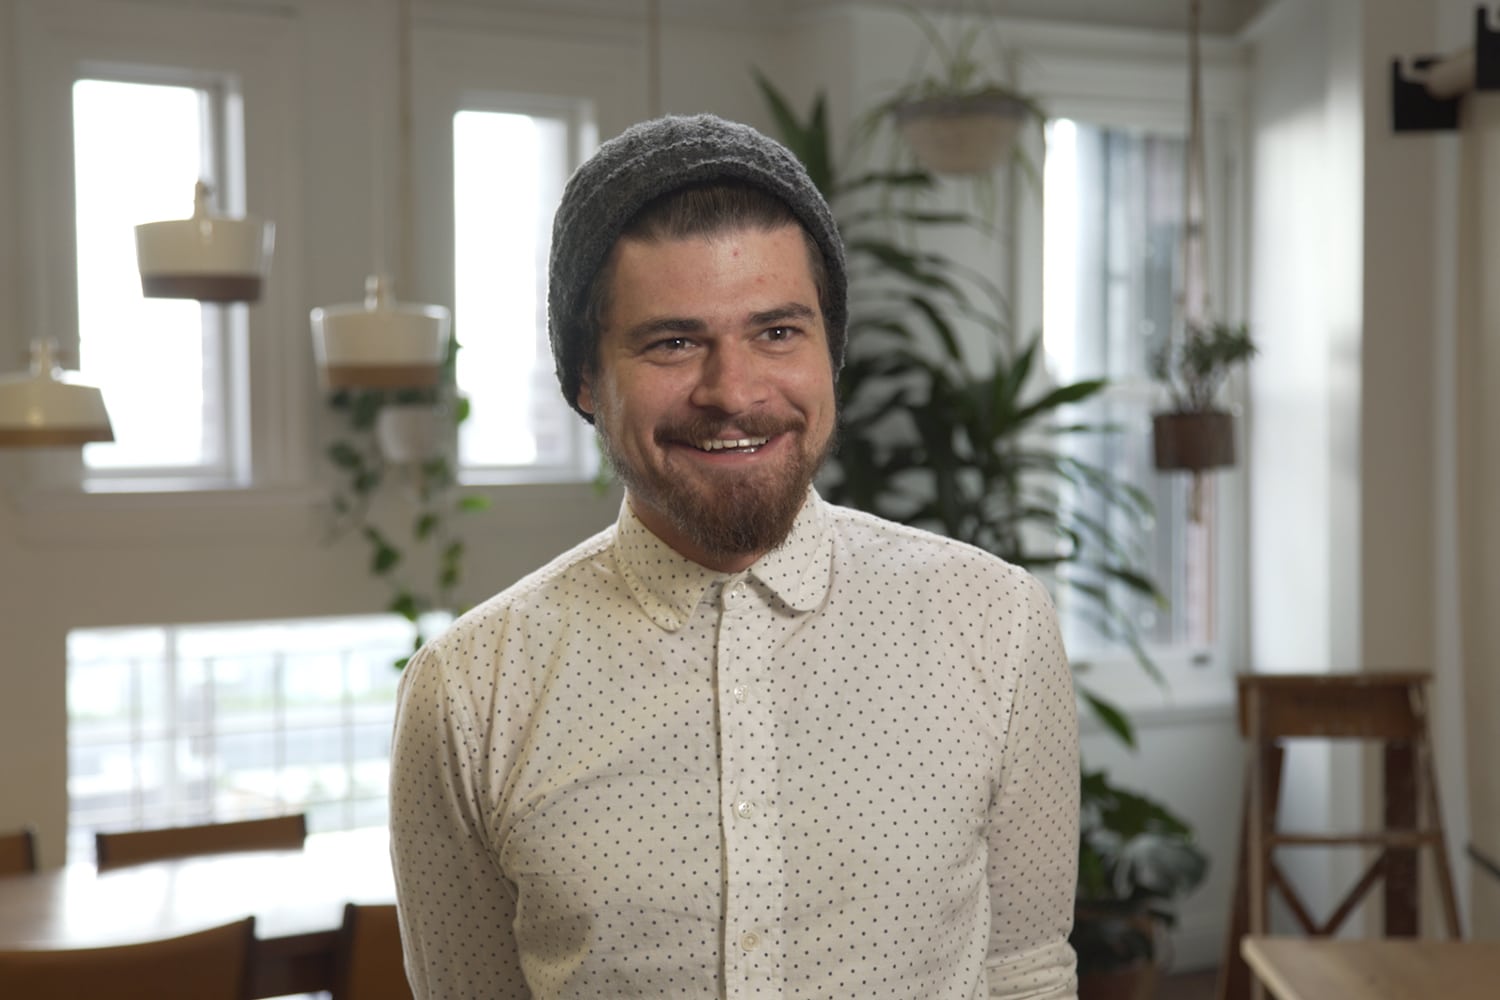 man wear polka dot shirt with smiling face